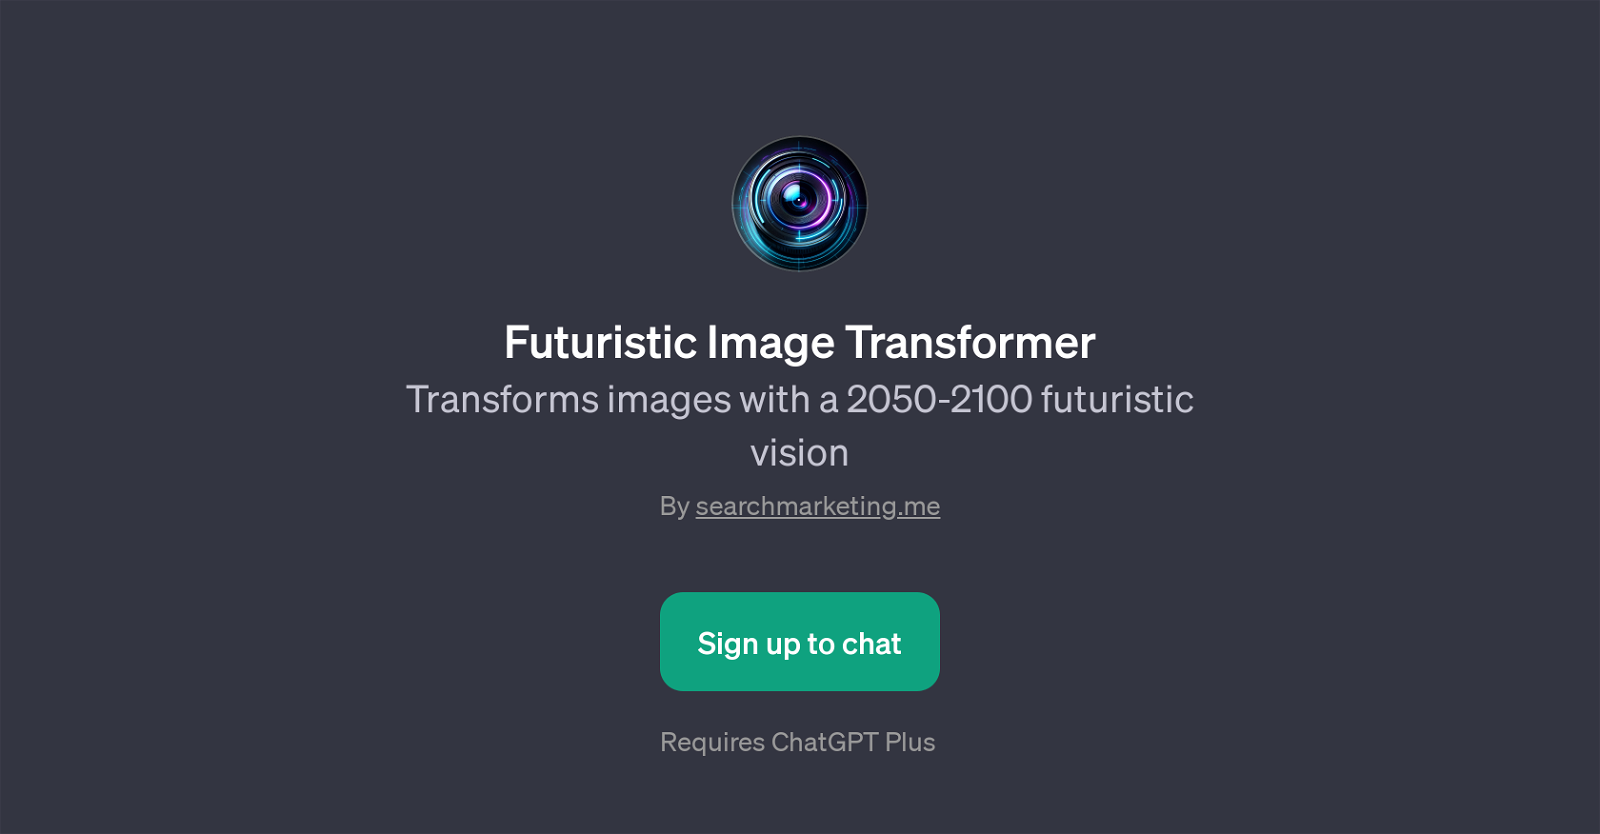 Futuristic Image Transformer website